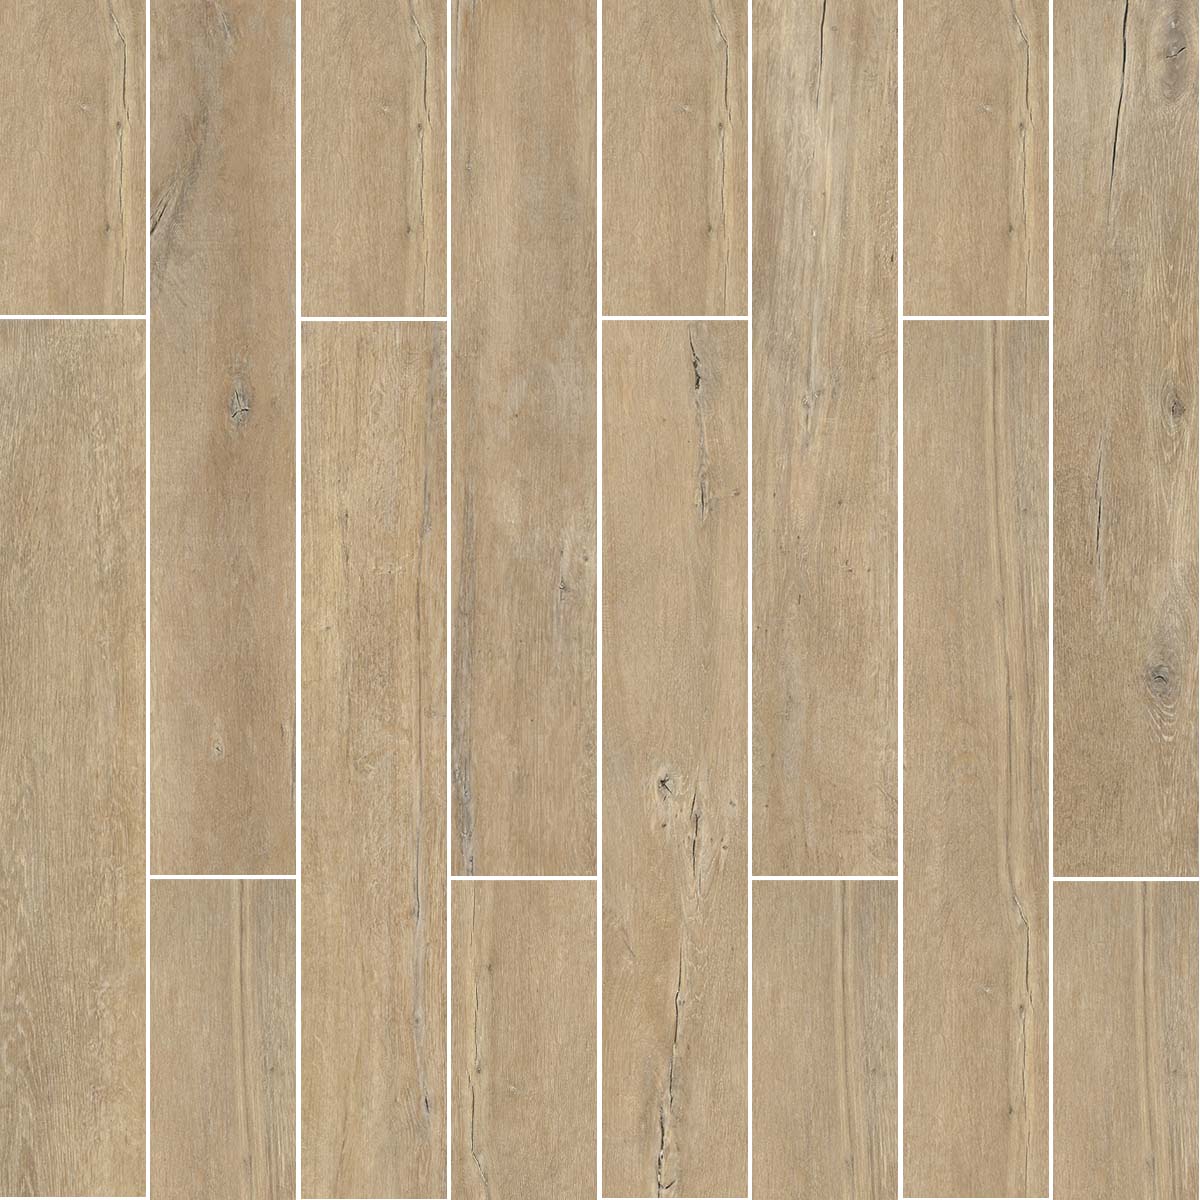 lenk taupe wood effect tile main 20x120cm pattern